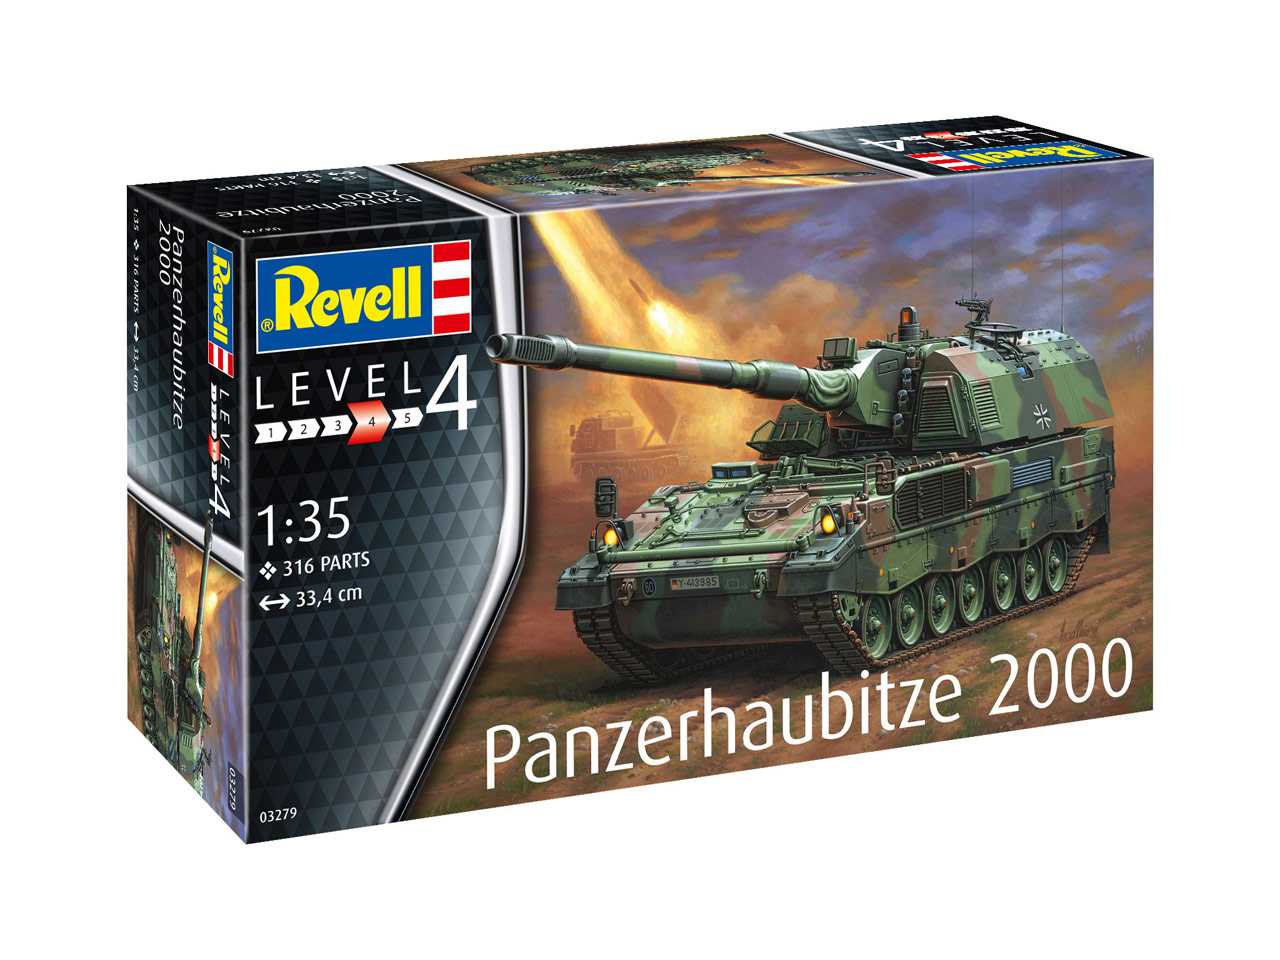 Revell Plastic ModelKit tank 03279 - Panzerhaubitze 2000 (1:35)